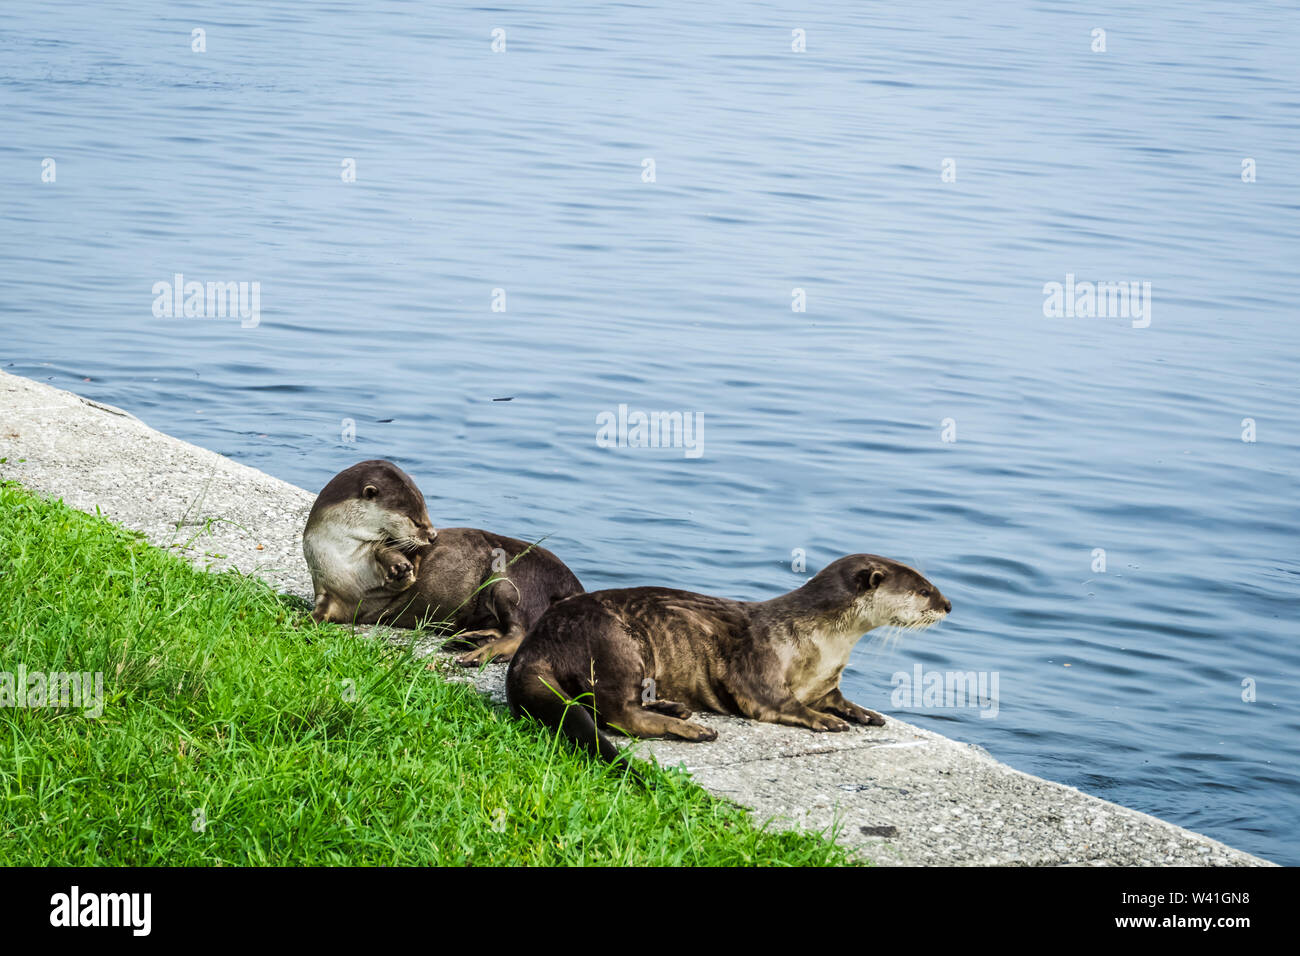 Wild Sea Otter found in Sembawang beach in Singapore. Stock Photo